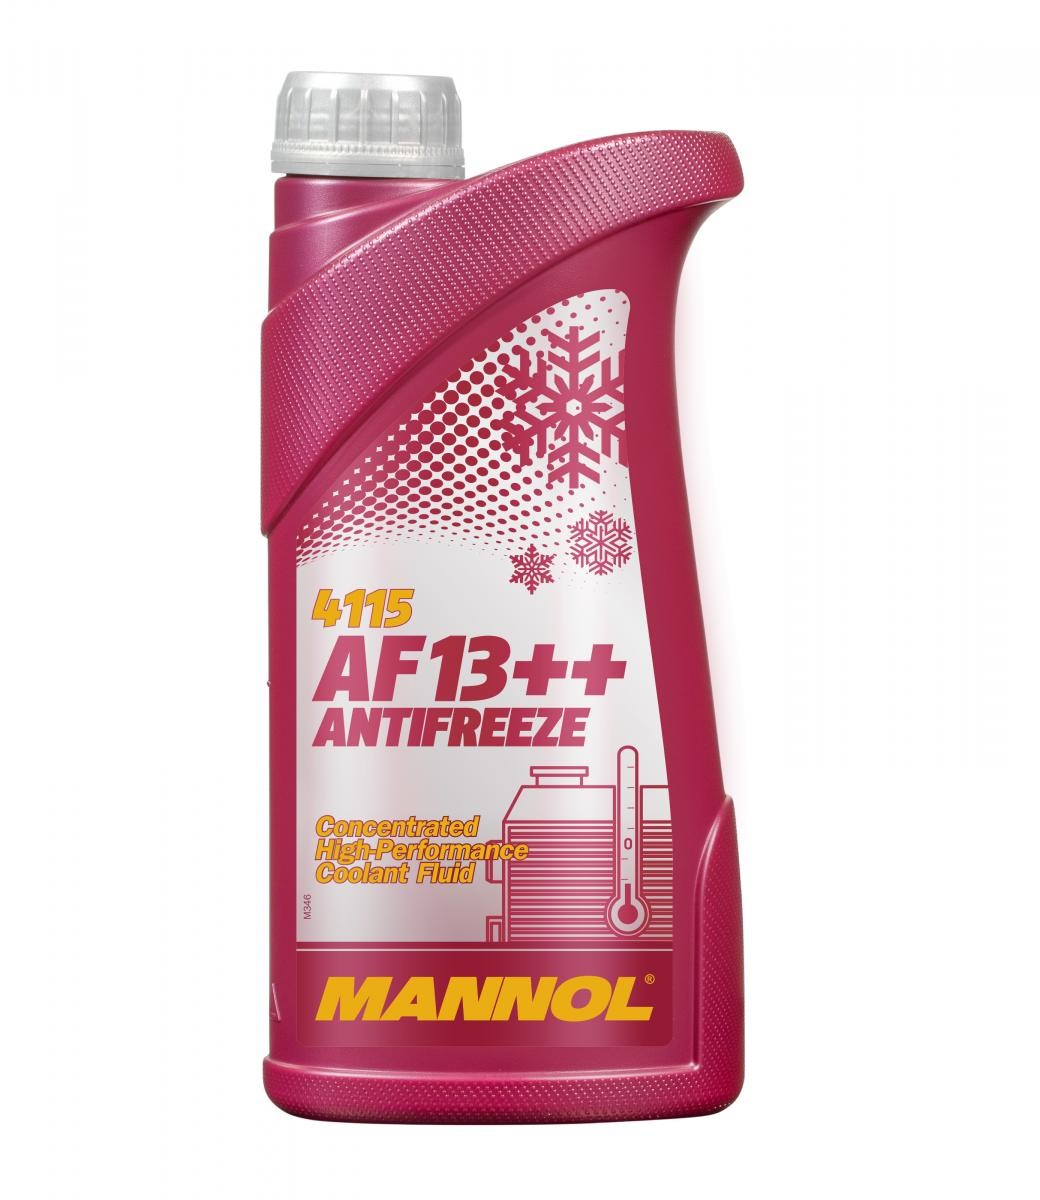 HERCULES RX Kühlmittel G12 Rot, 1l, -38(50/50) MANNOL AF13++, High-performance MN4115-1